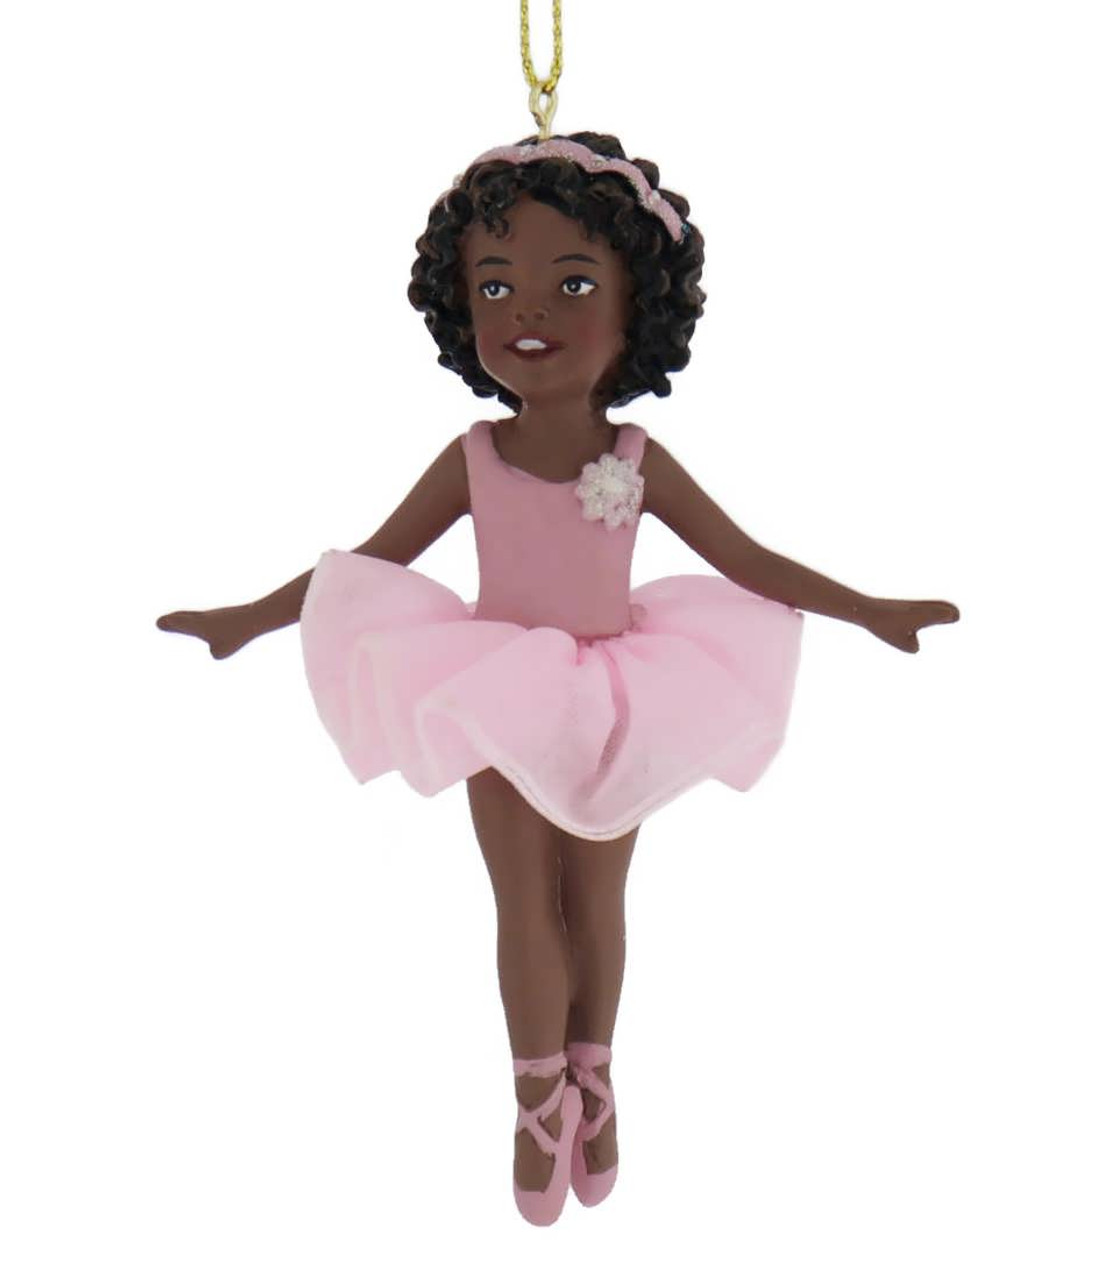 Landbrug Hvor hoppe Black - African American Ballerina Girl on Toes Ornament 4 3/8" by KSA